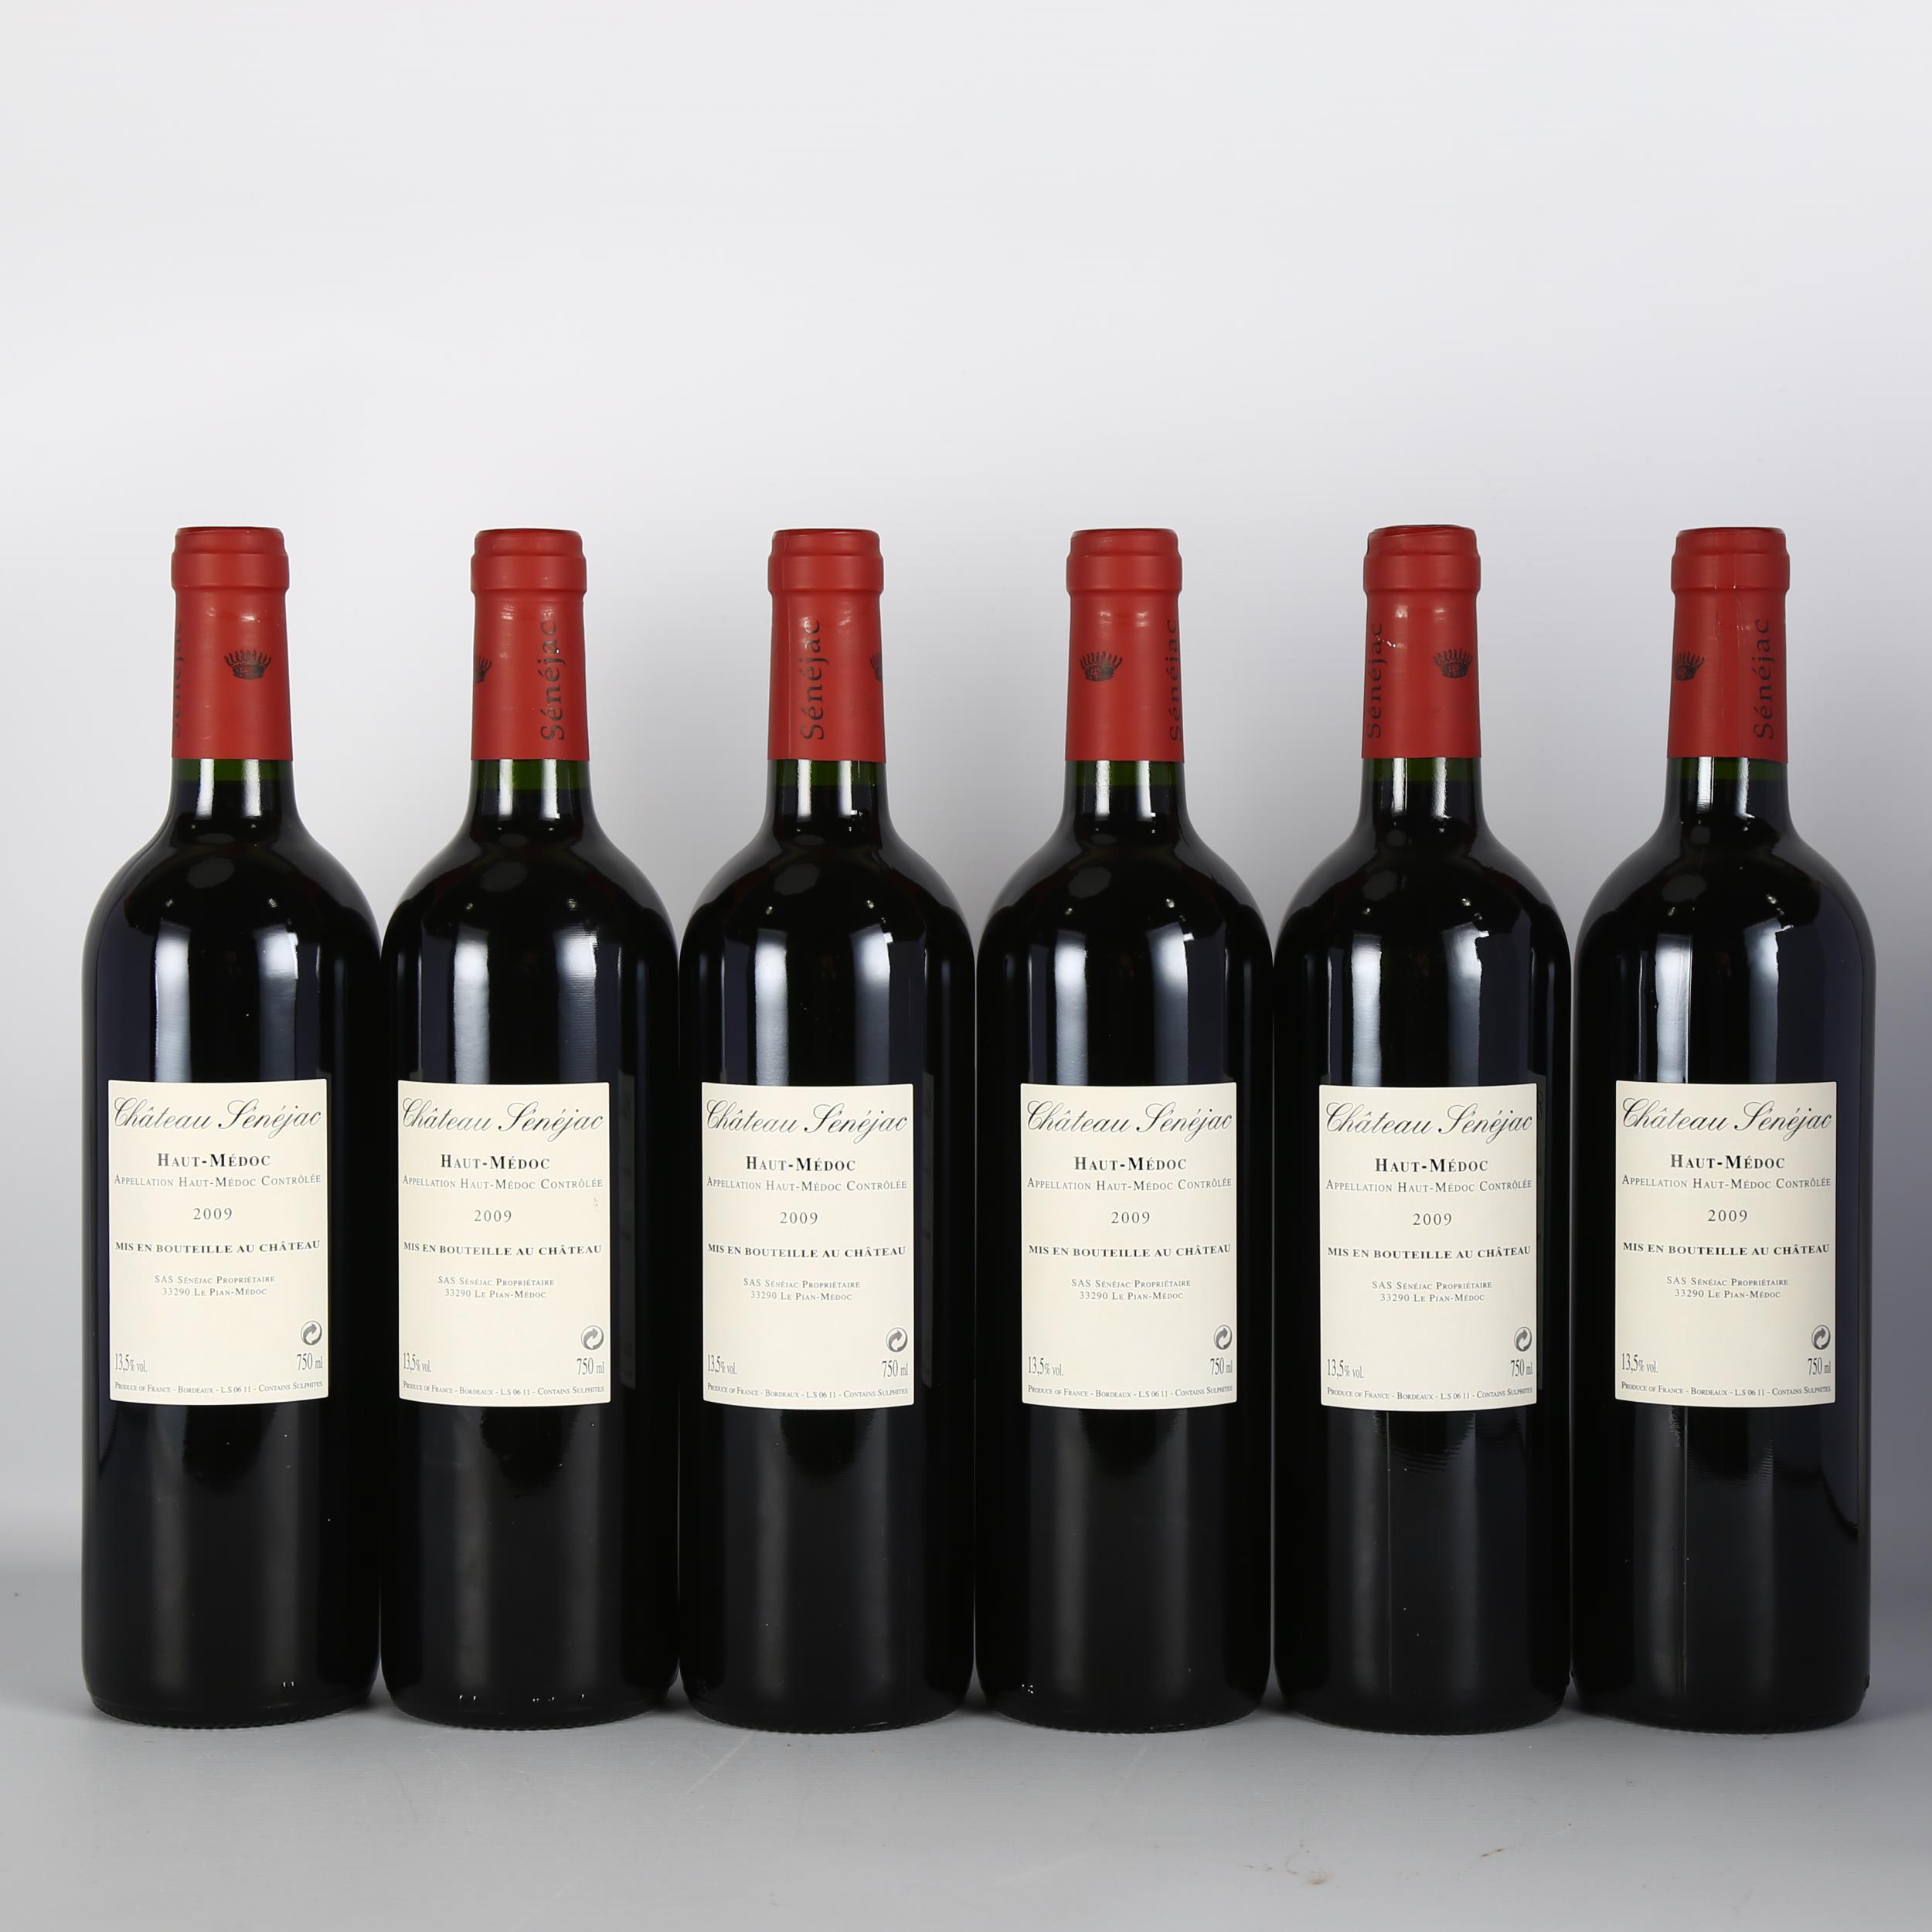 Chateau Senejac 2009, Haut-Medoc x 6 bottles. 93 points Wine Advocate. Bordeaux red wine. - Image 3 of 3